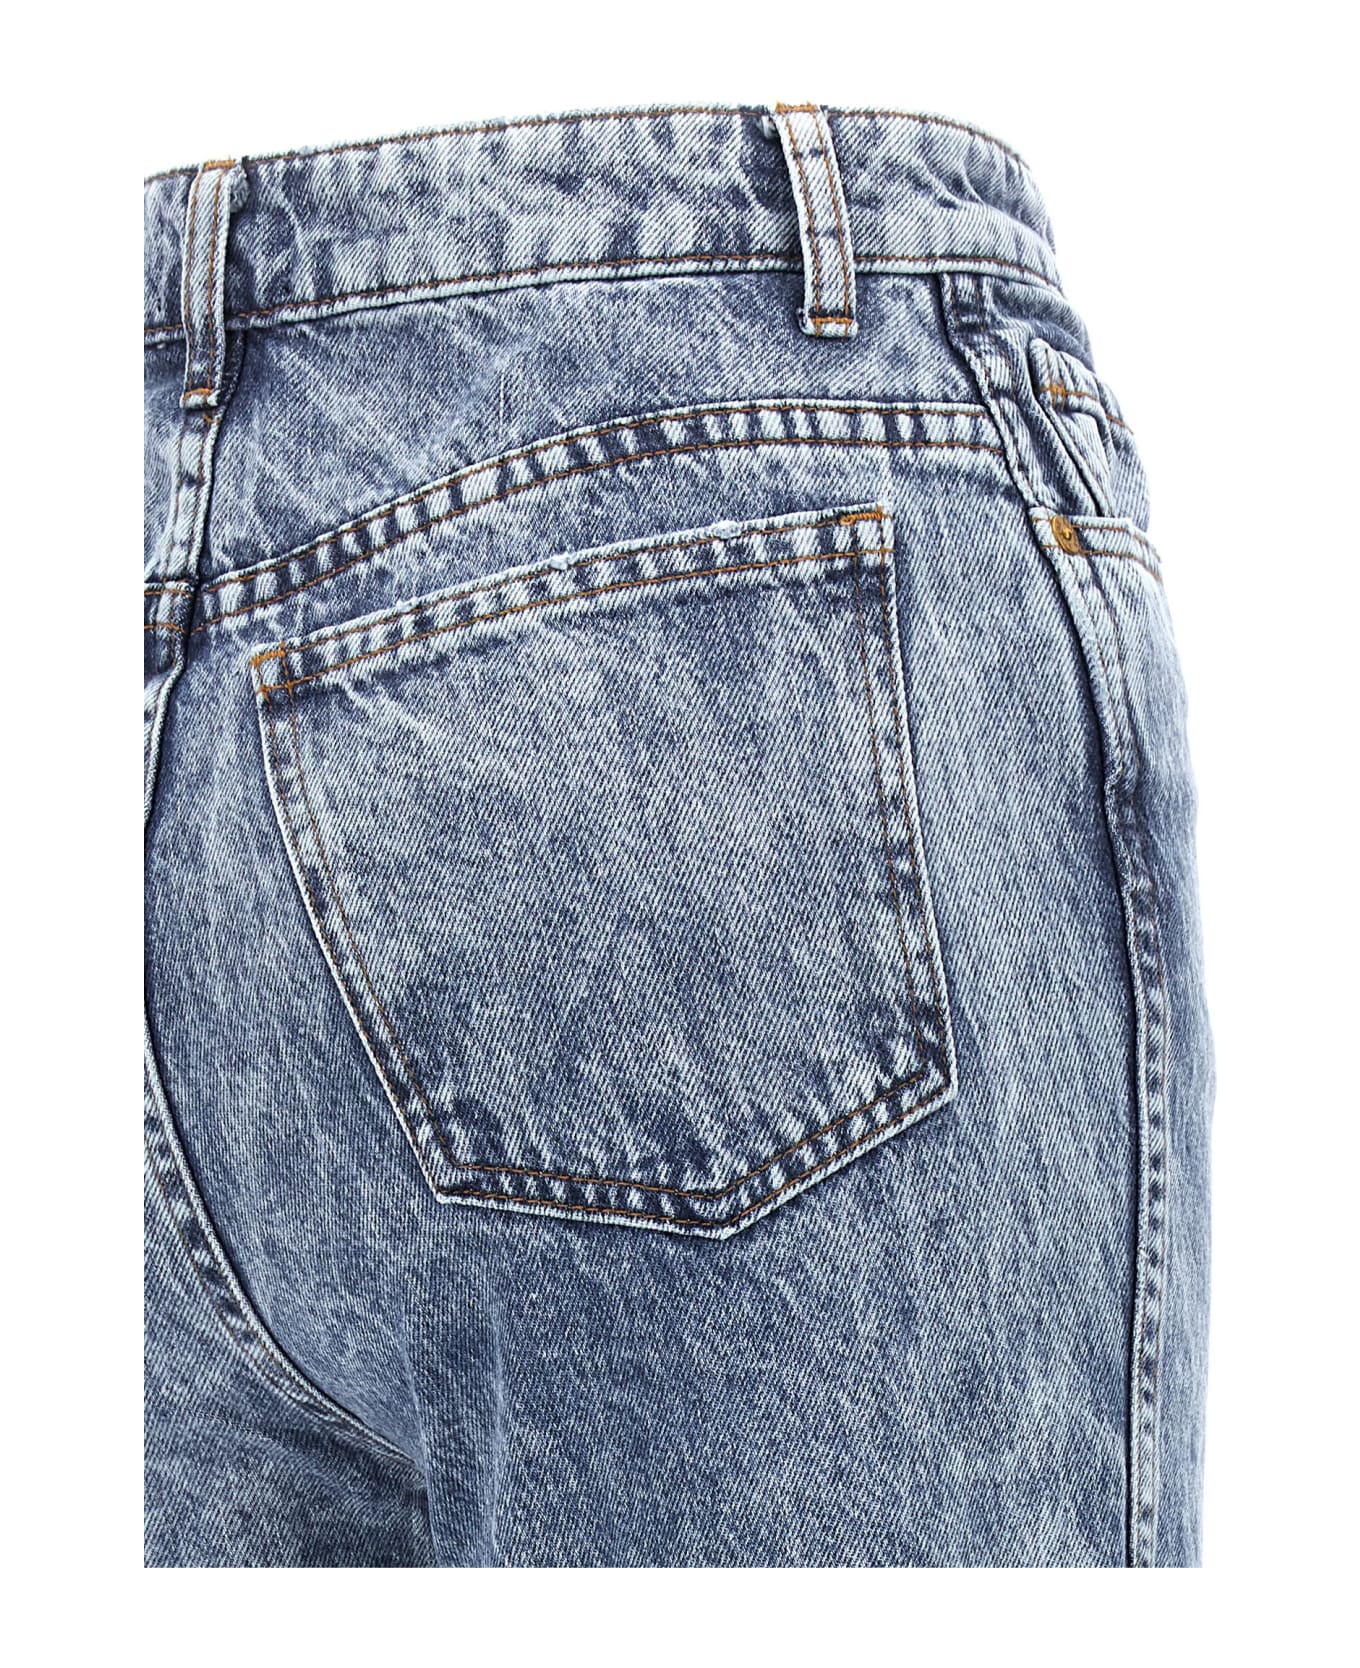 Khaite 'danielle' Jeans - Bryce